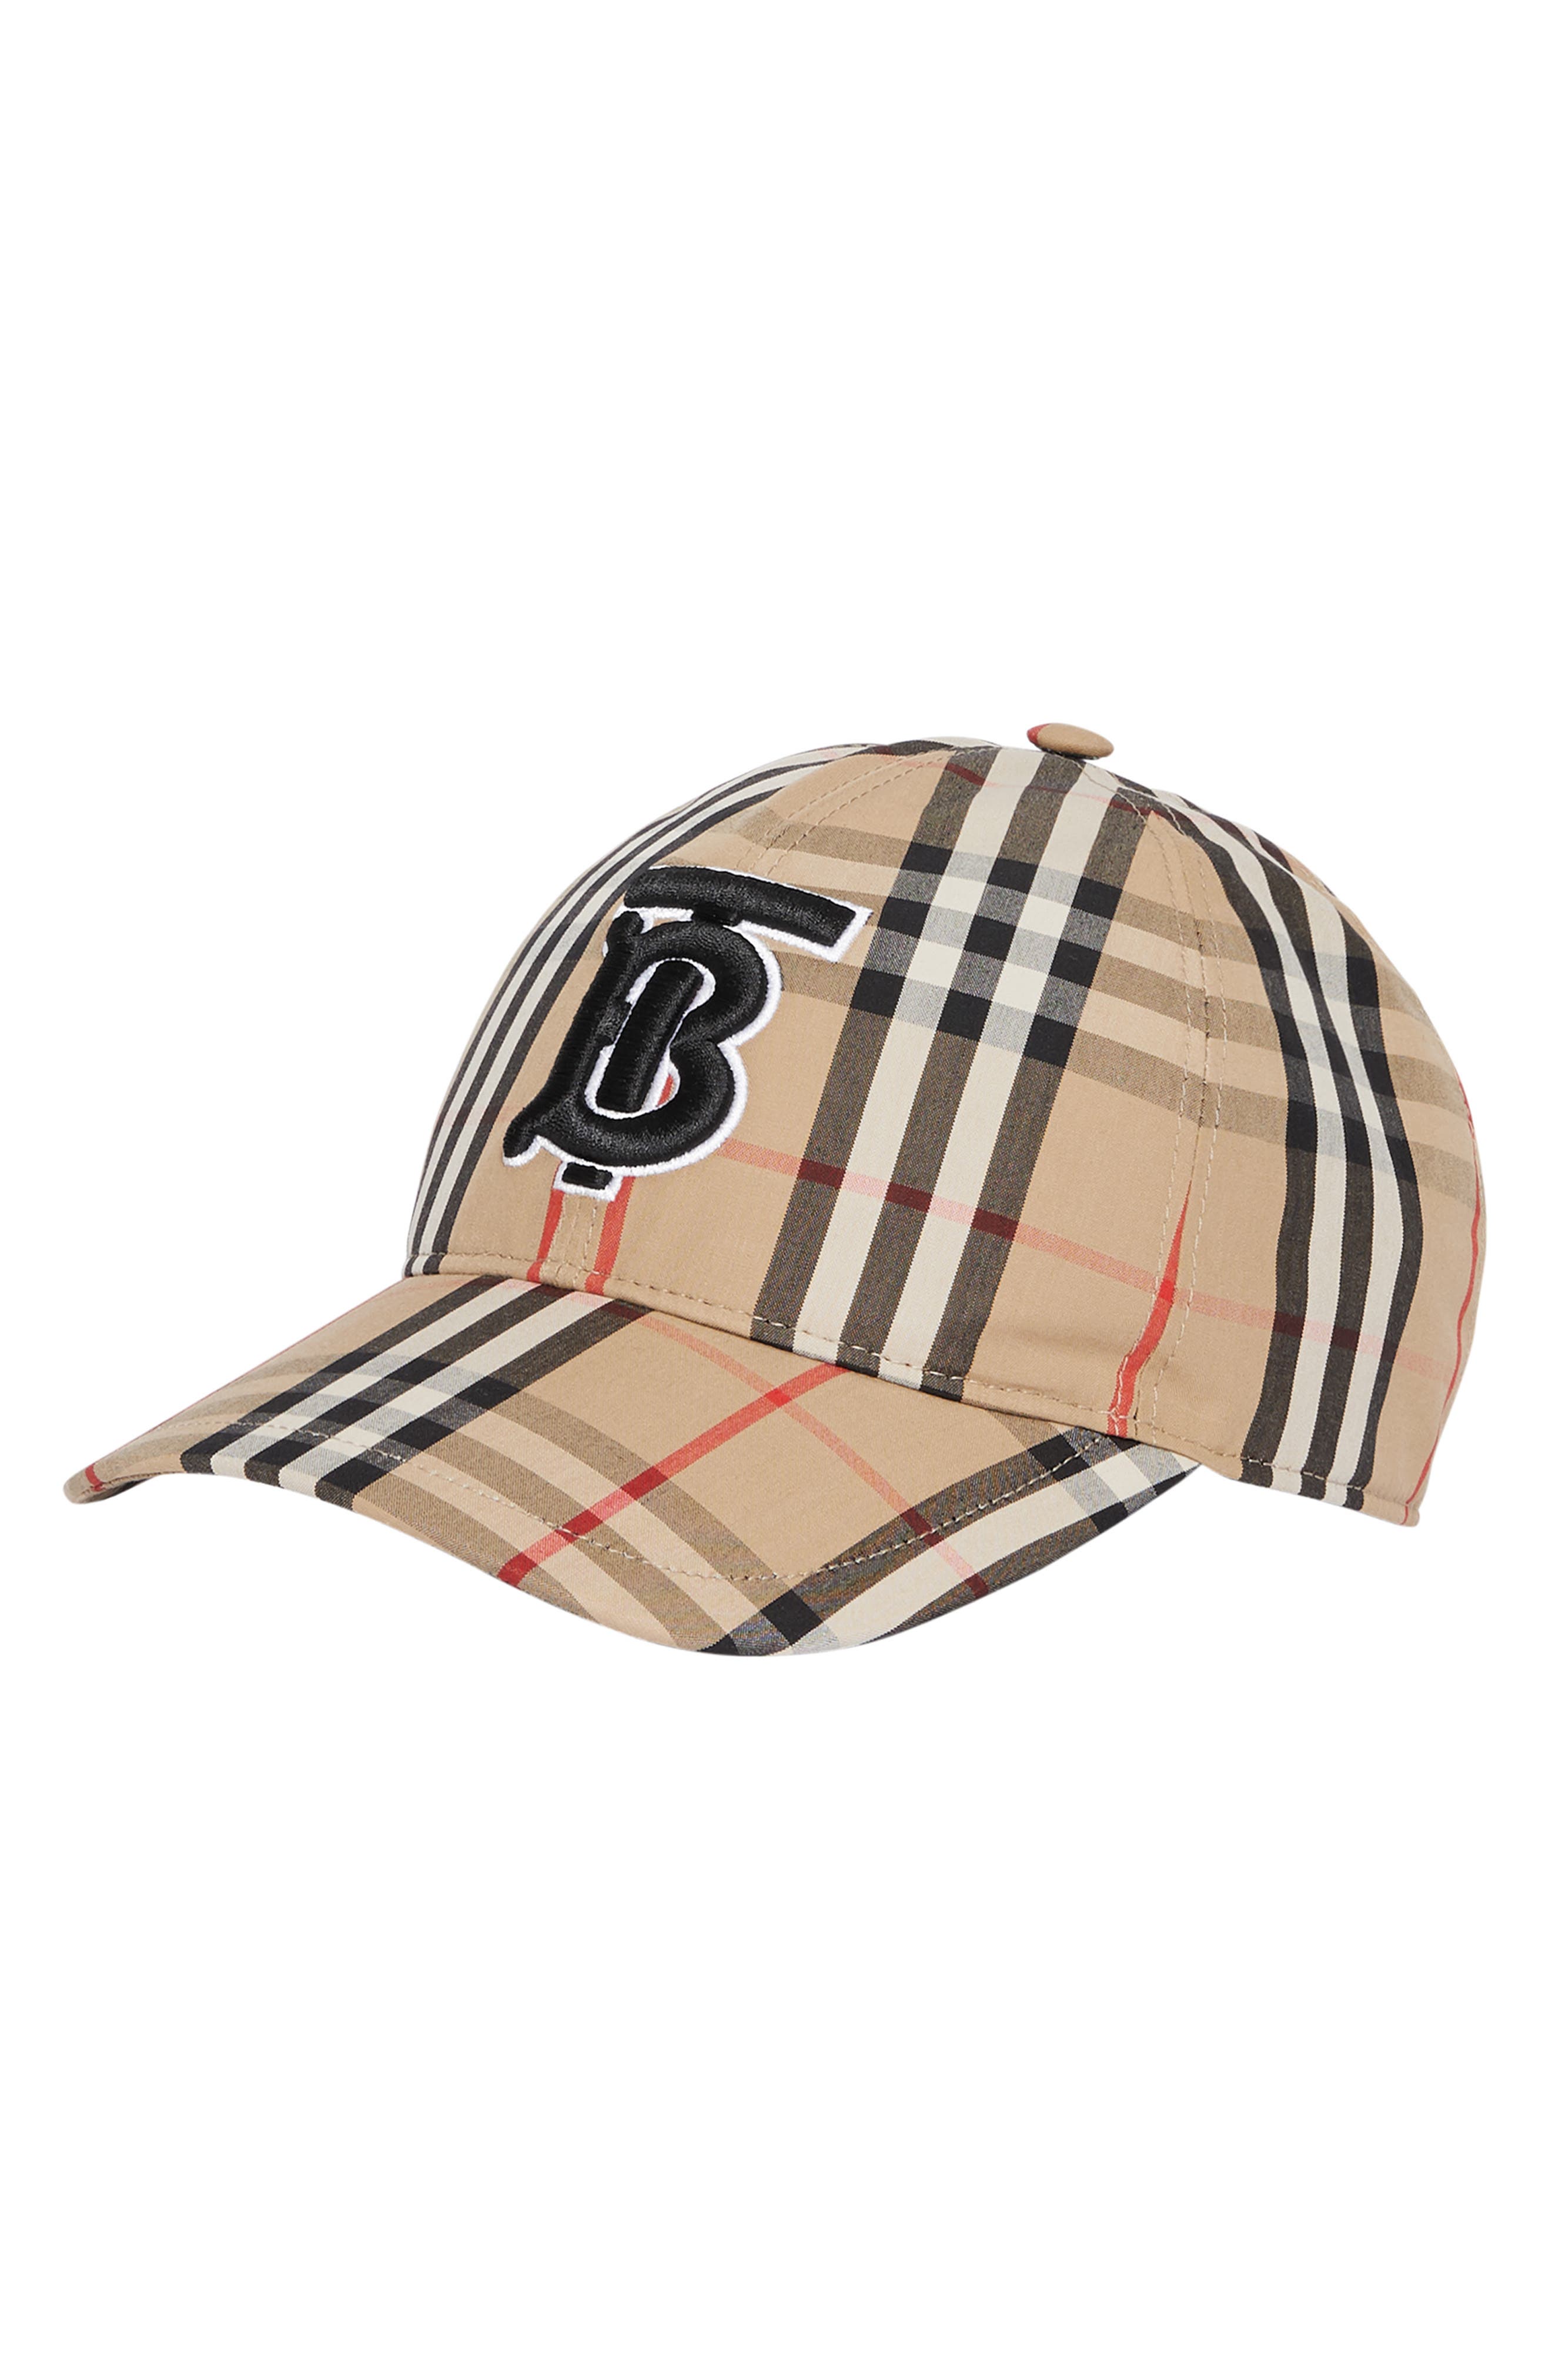 vintage check baseball cap